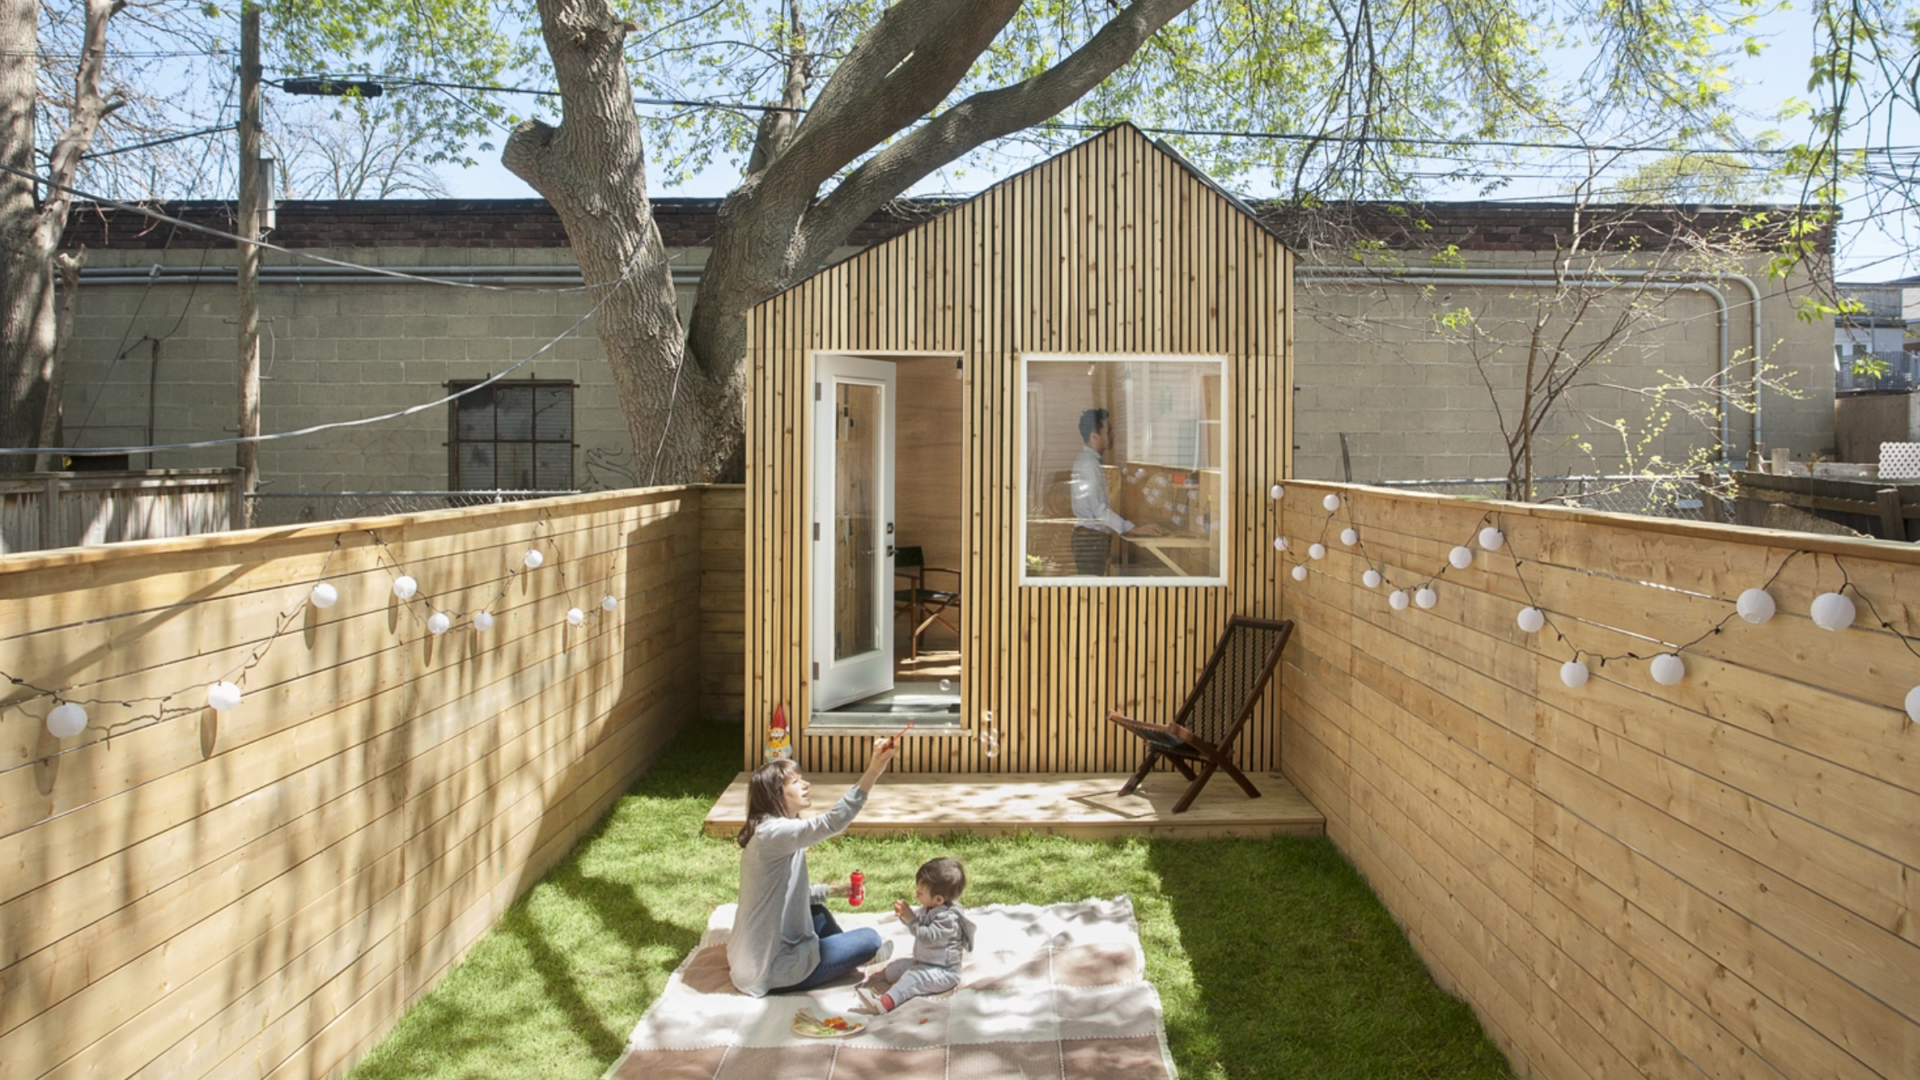 Dezeen – This Architect’s Studio Is the Ultimate Backyard Workspace